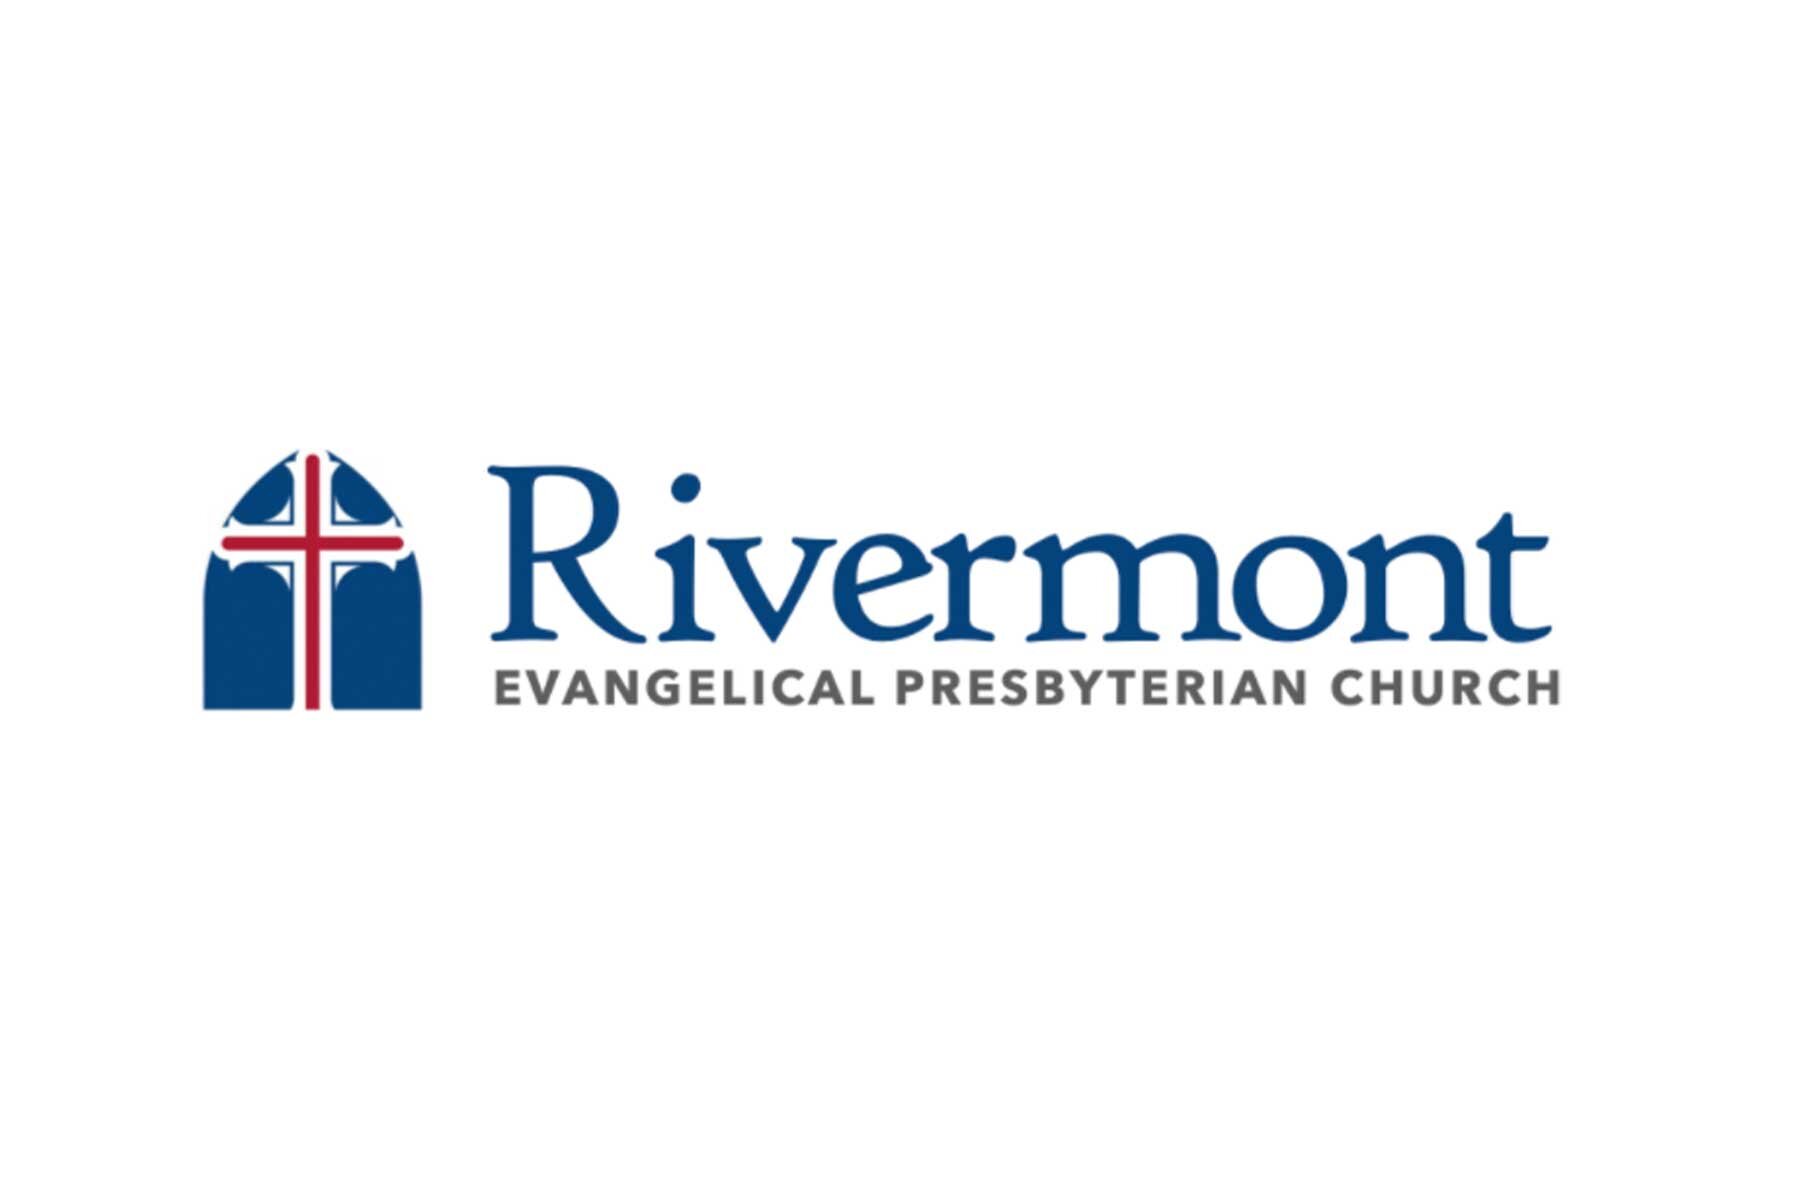 Rivermont Evangelical Presbyterian Church